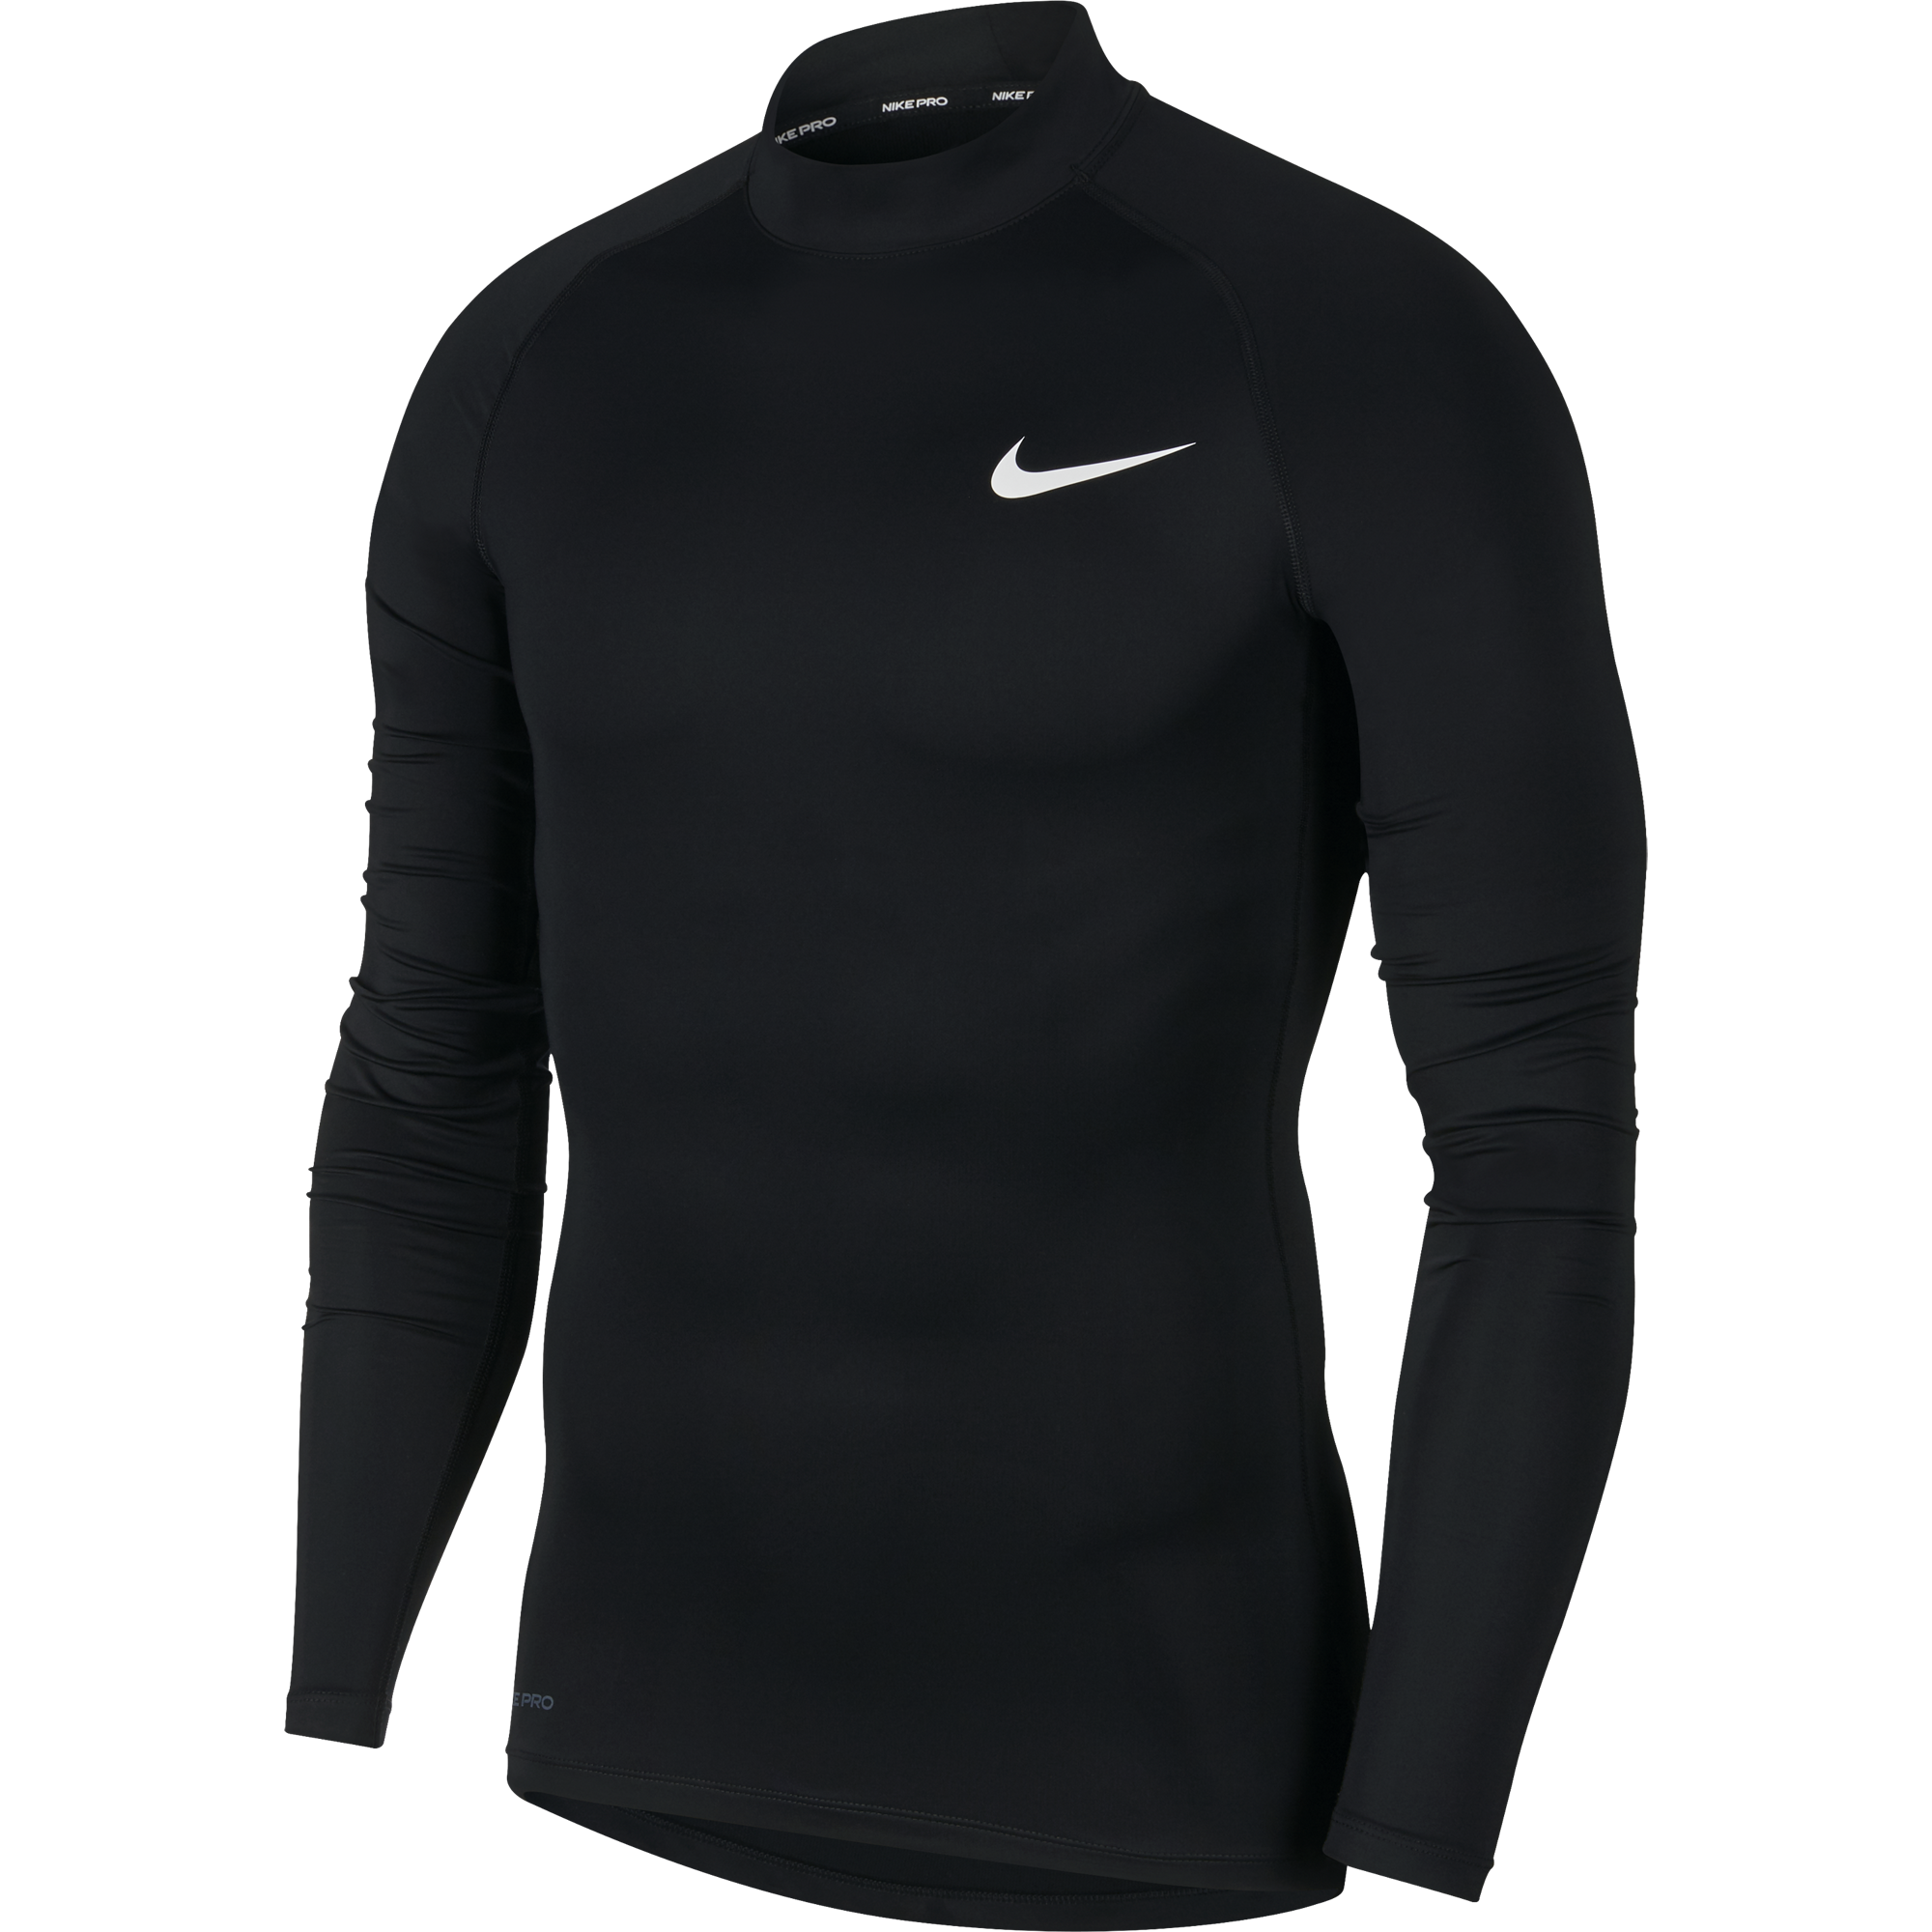 Nike Pro Elite Sleeves Black/White Size Small/Medium